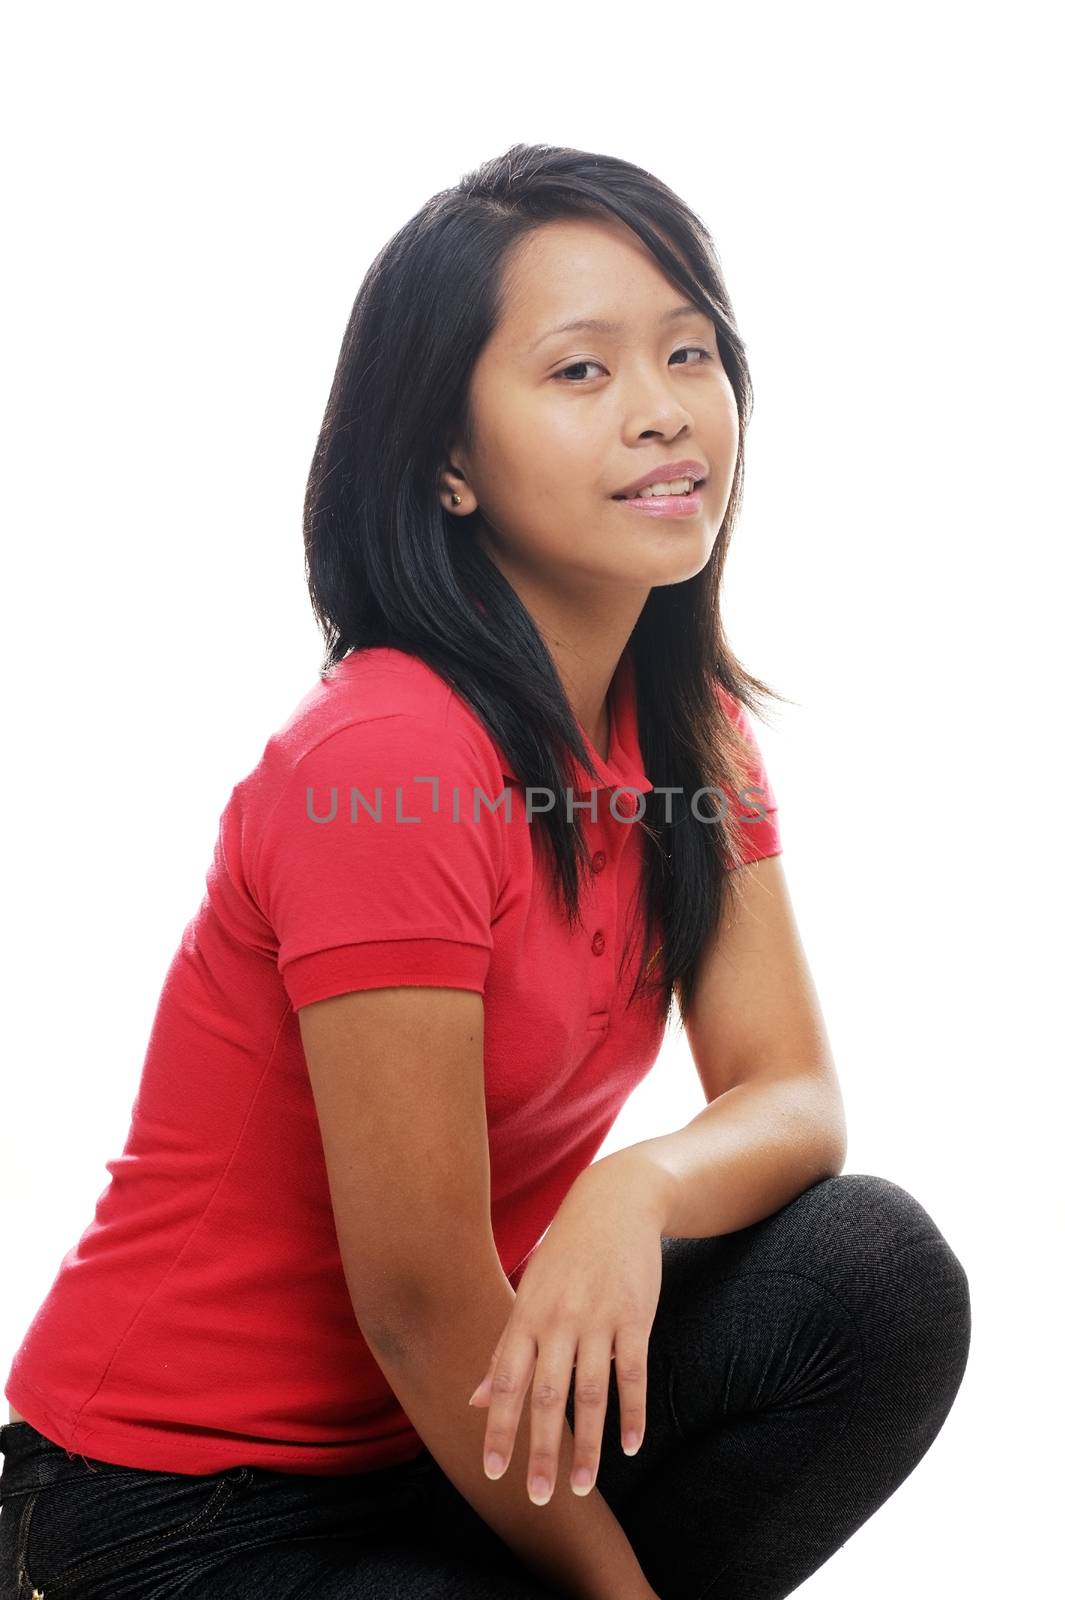 Relaxed asian teen girl wearing red shirt